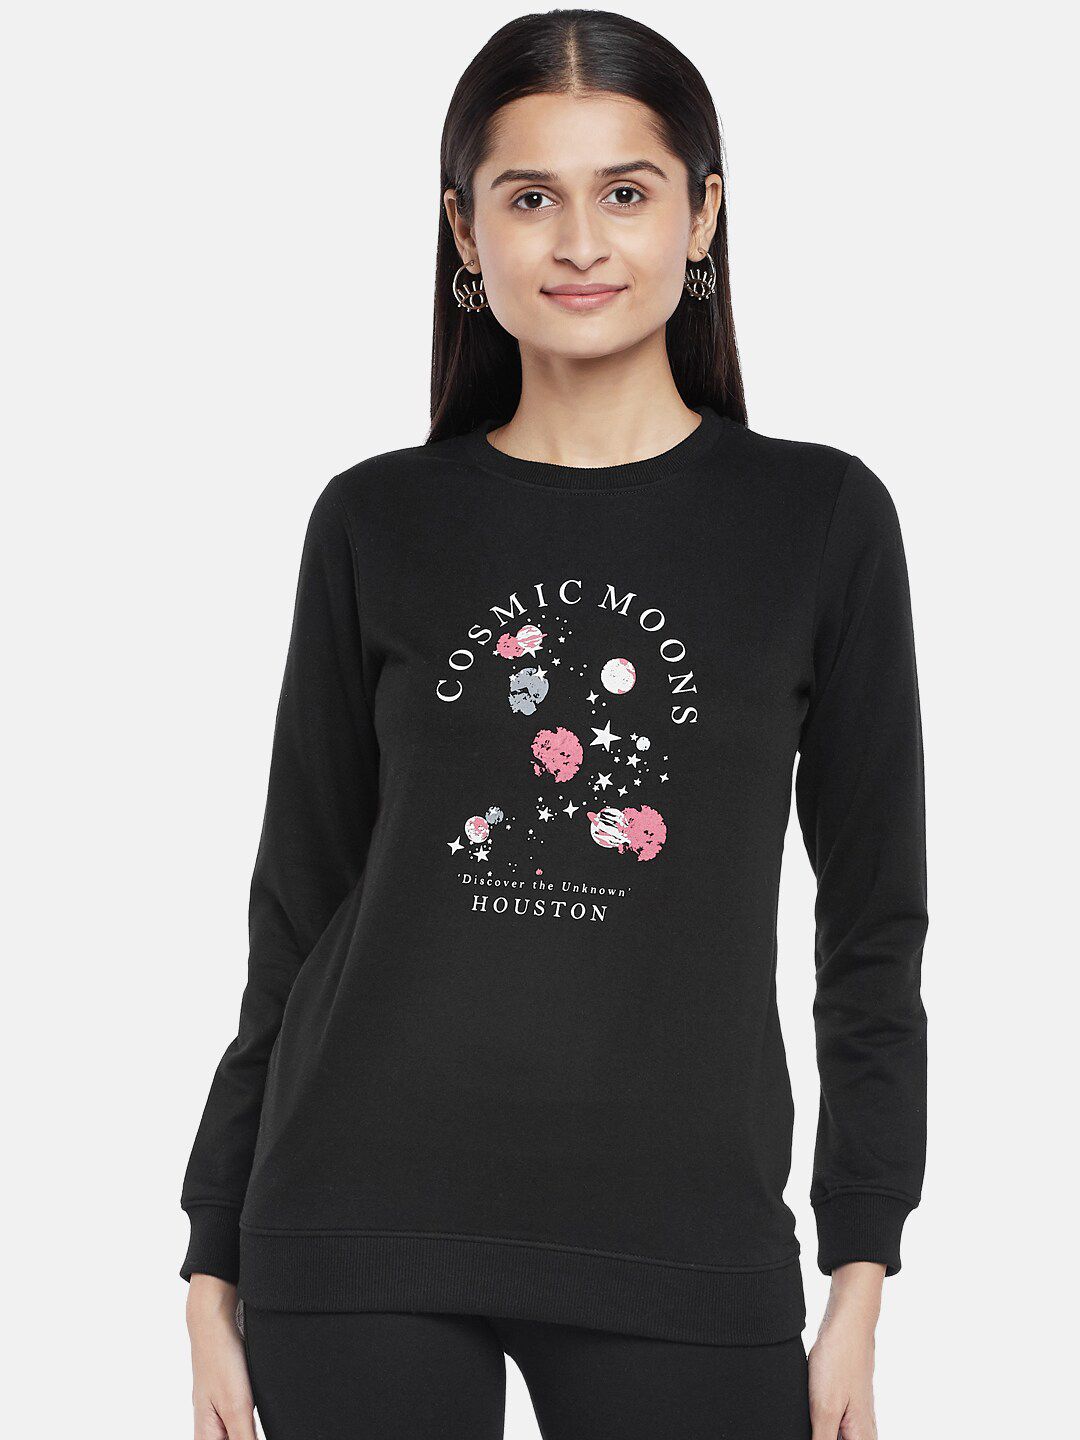 People Women Black & White Printed Sweatshirt Price in India